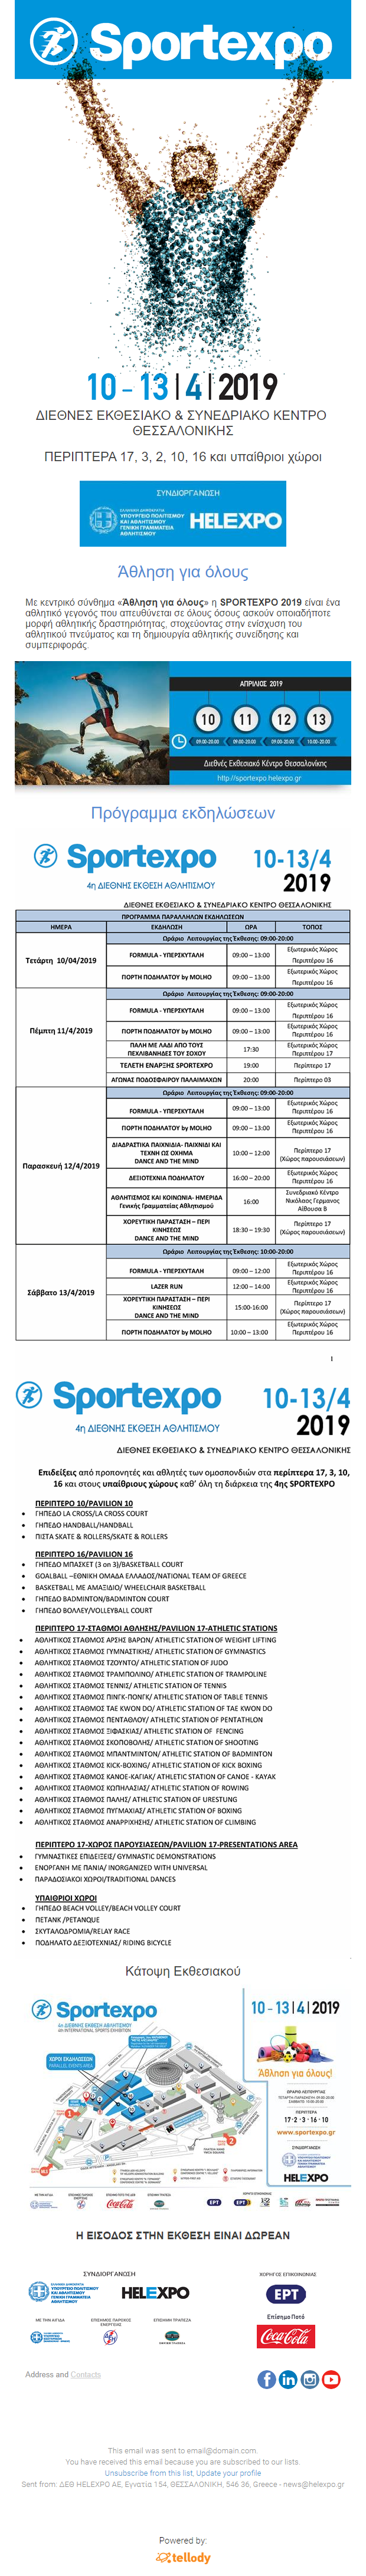 SPORTEXPO 2019 - Παράλληλες εκδηλώσεις